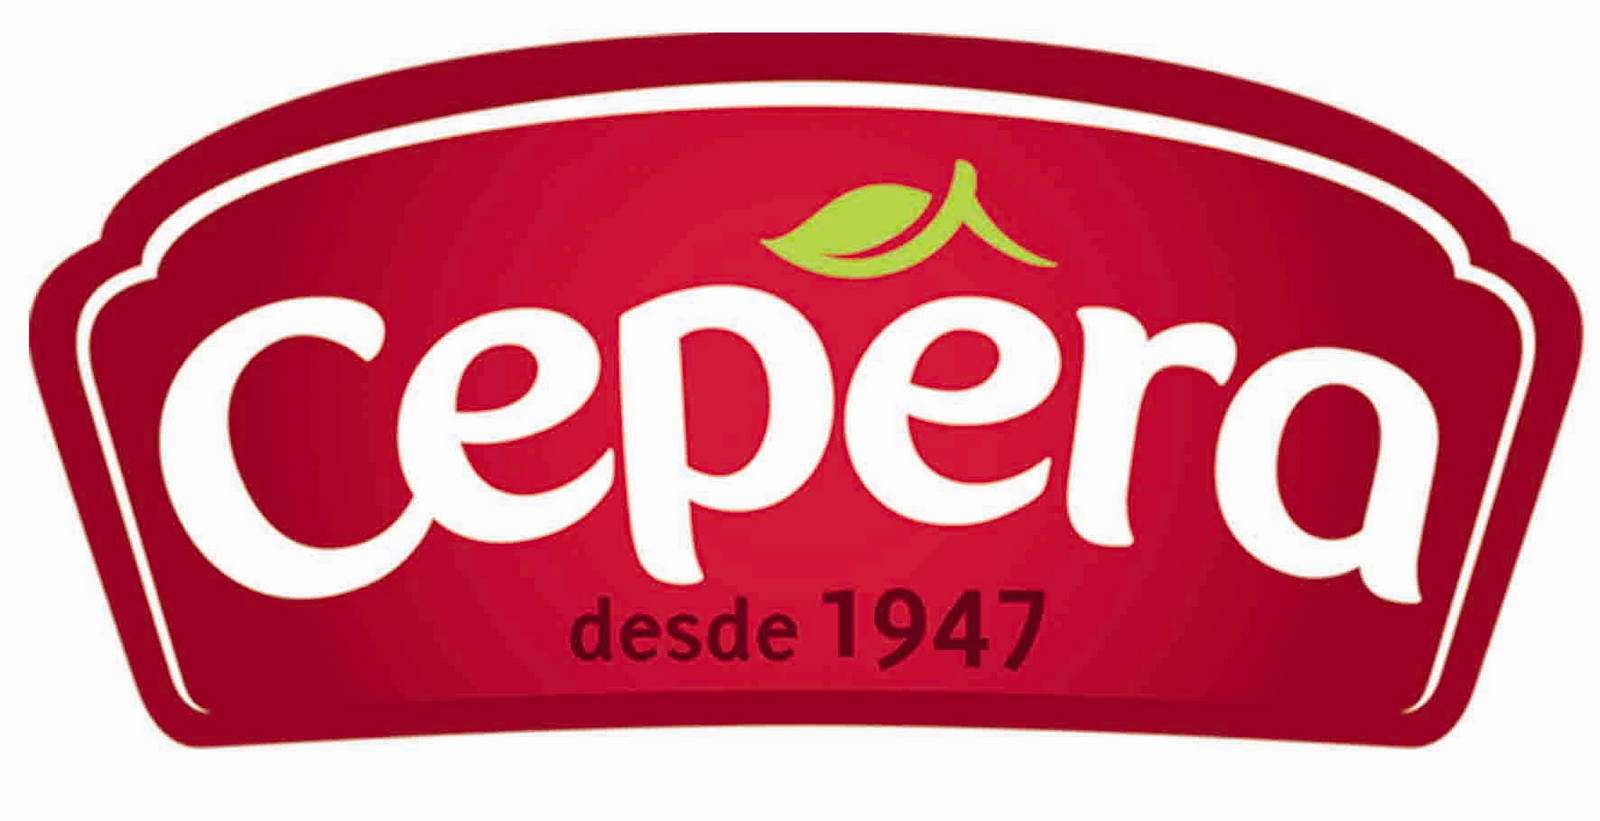 Brand cepera